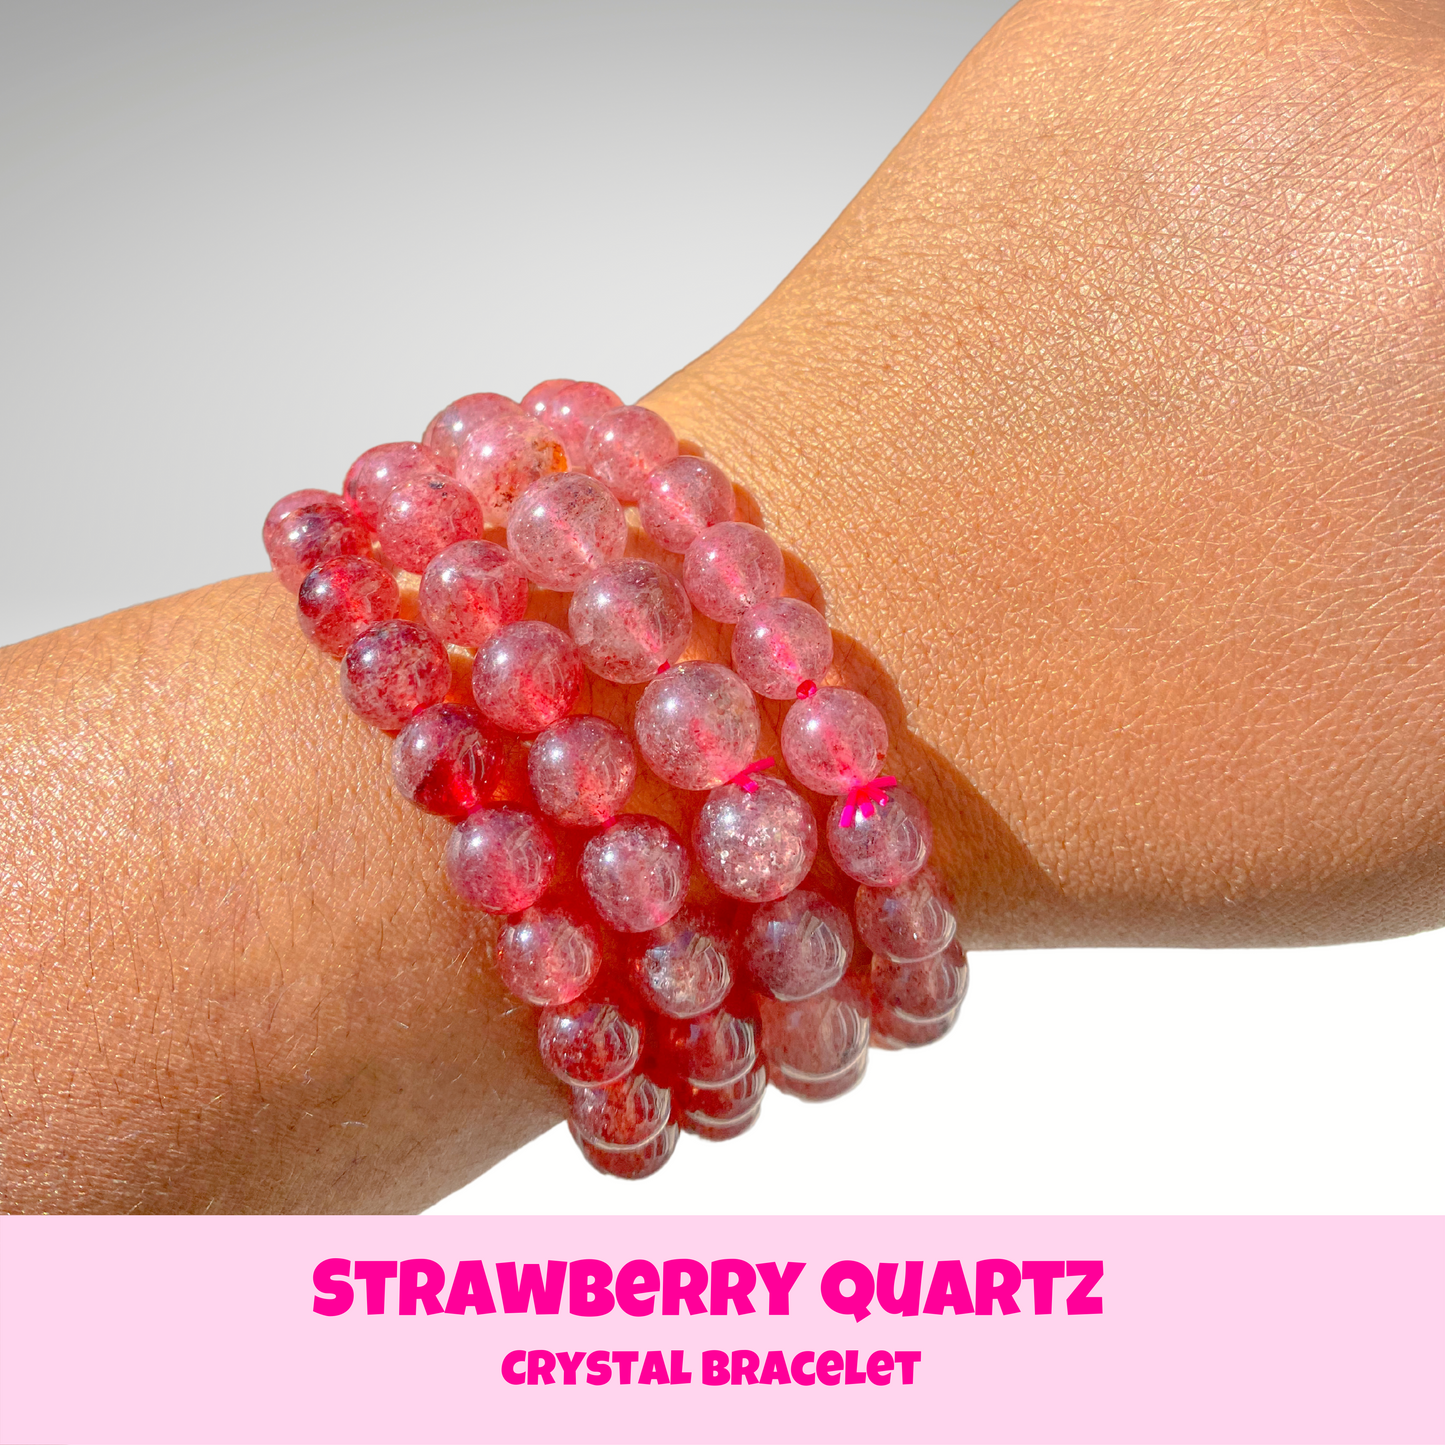 Strawberry Quartz Crystal Bracelet